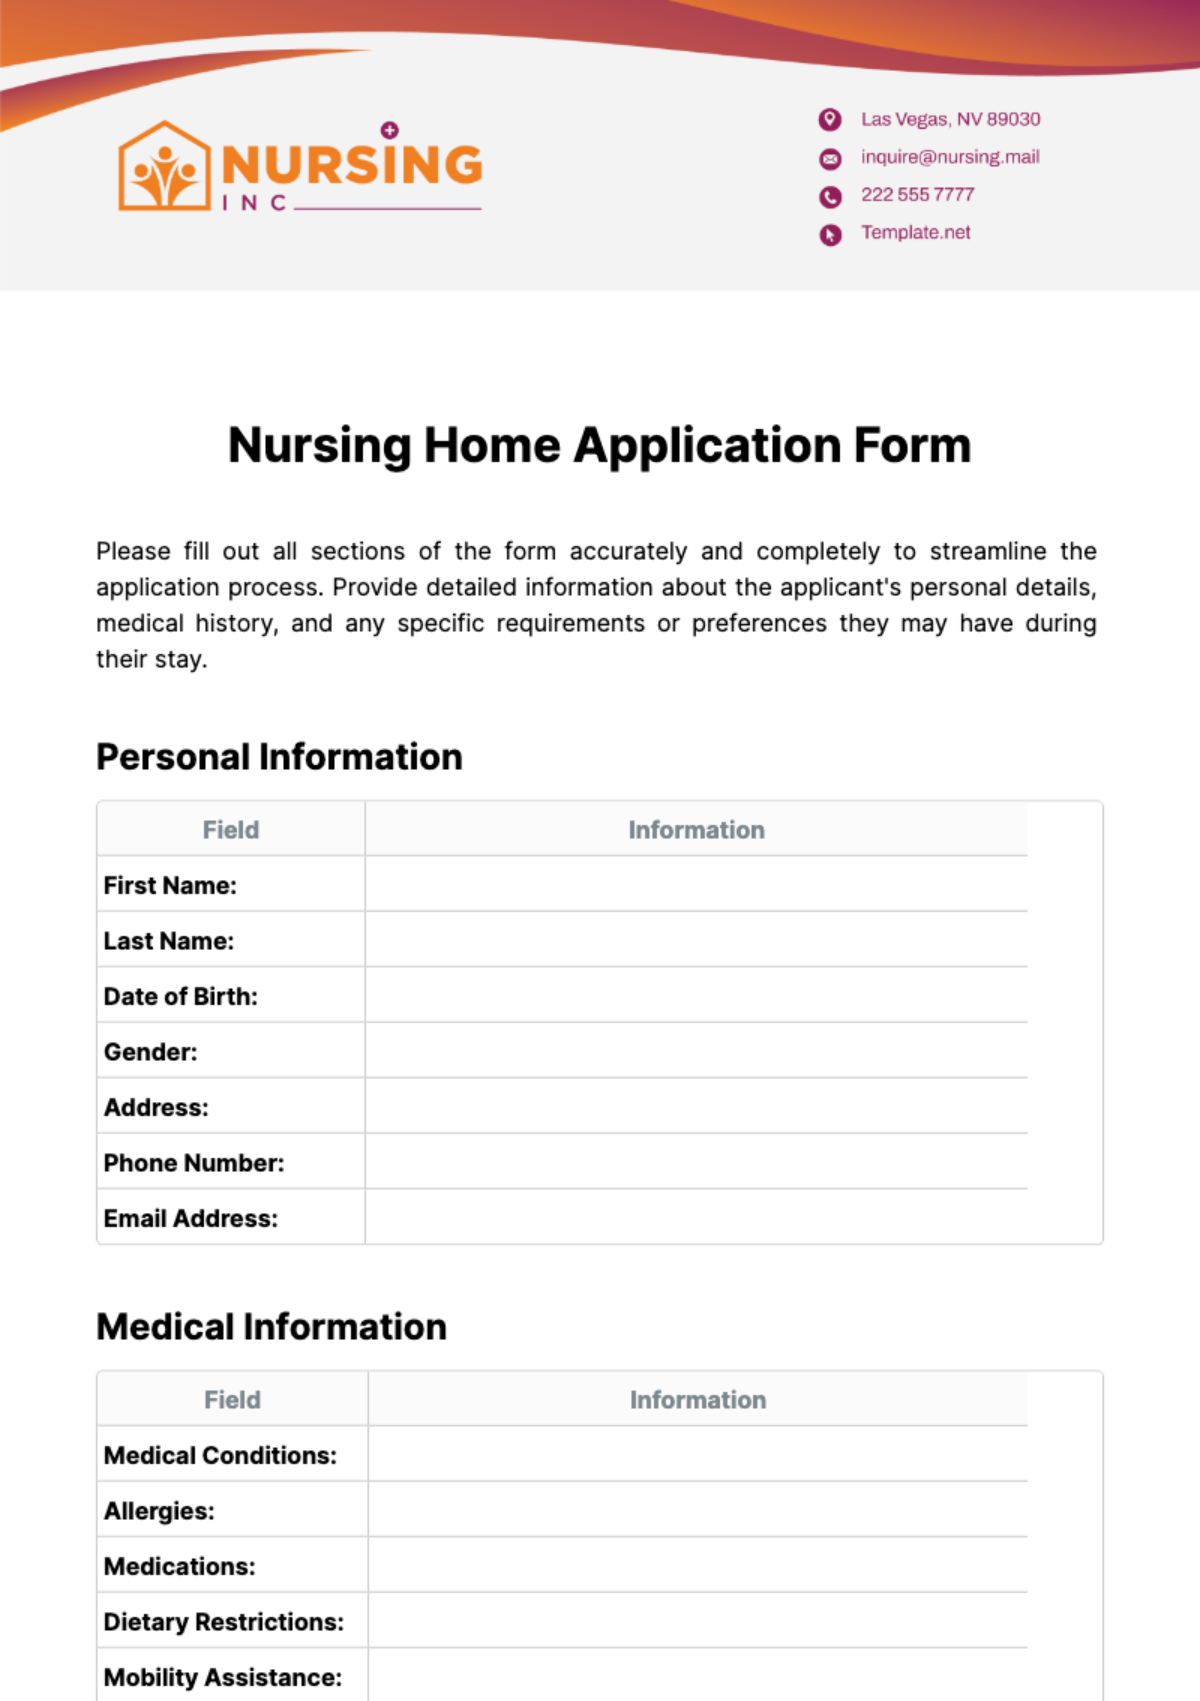 Nursing Home Application Form Template